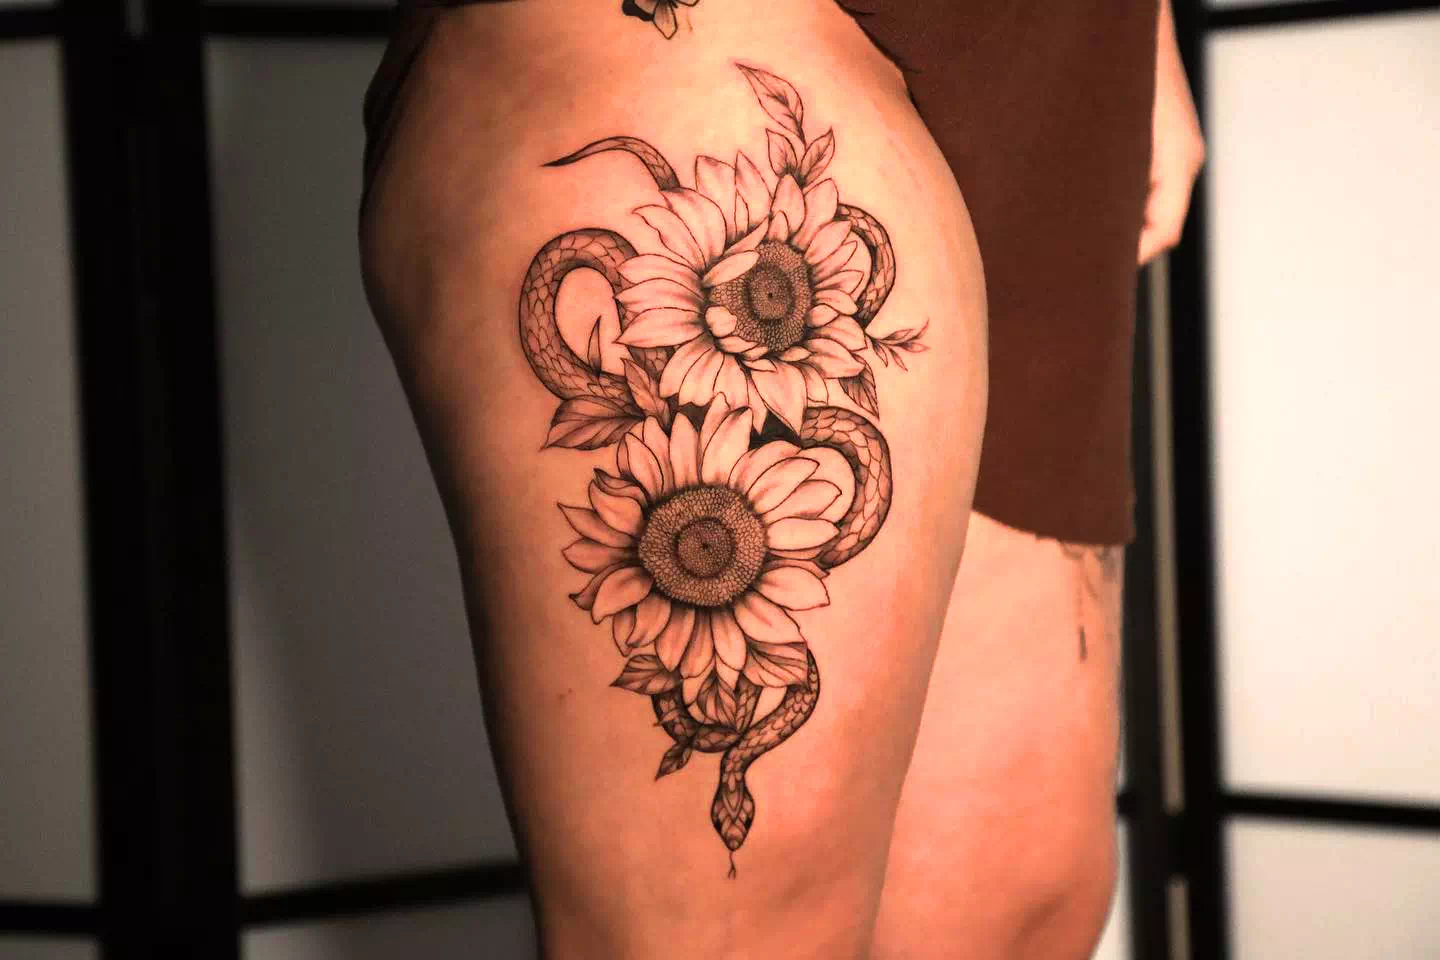 Sunflower Tattoo on Thigh 1